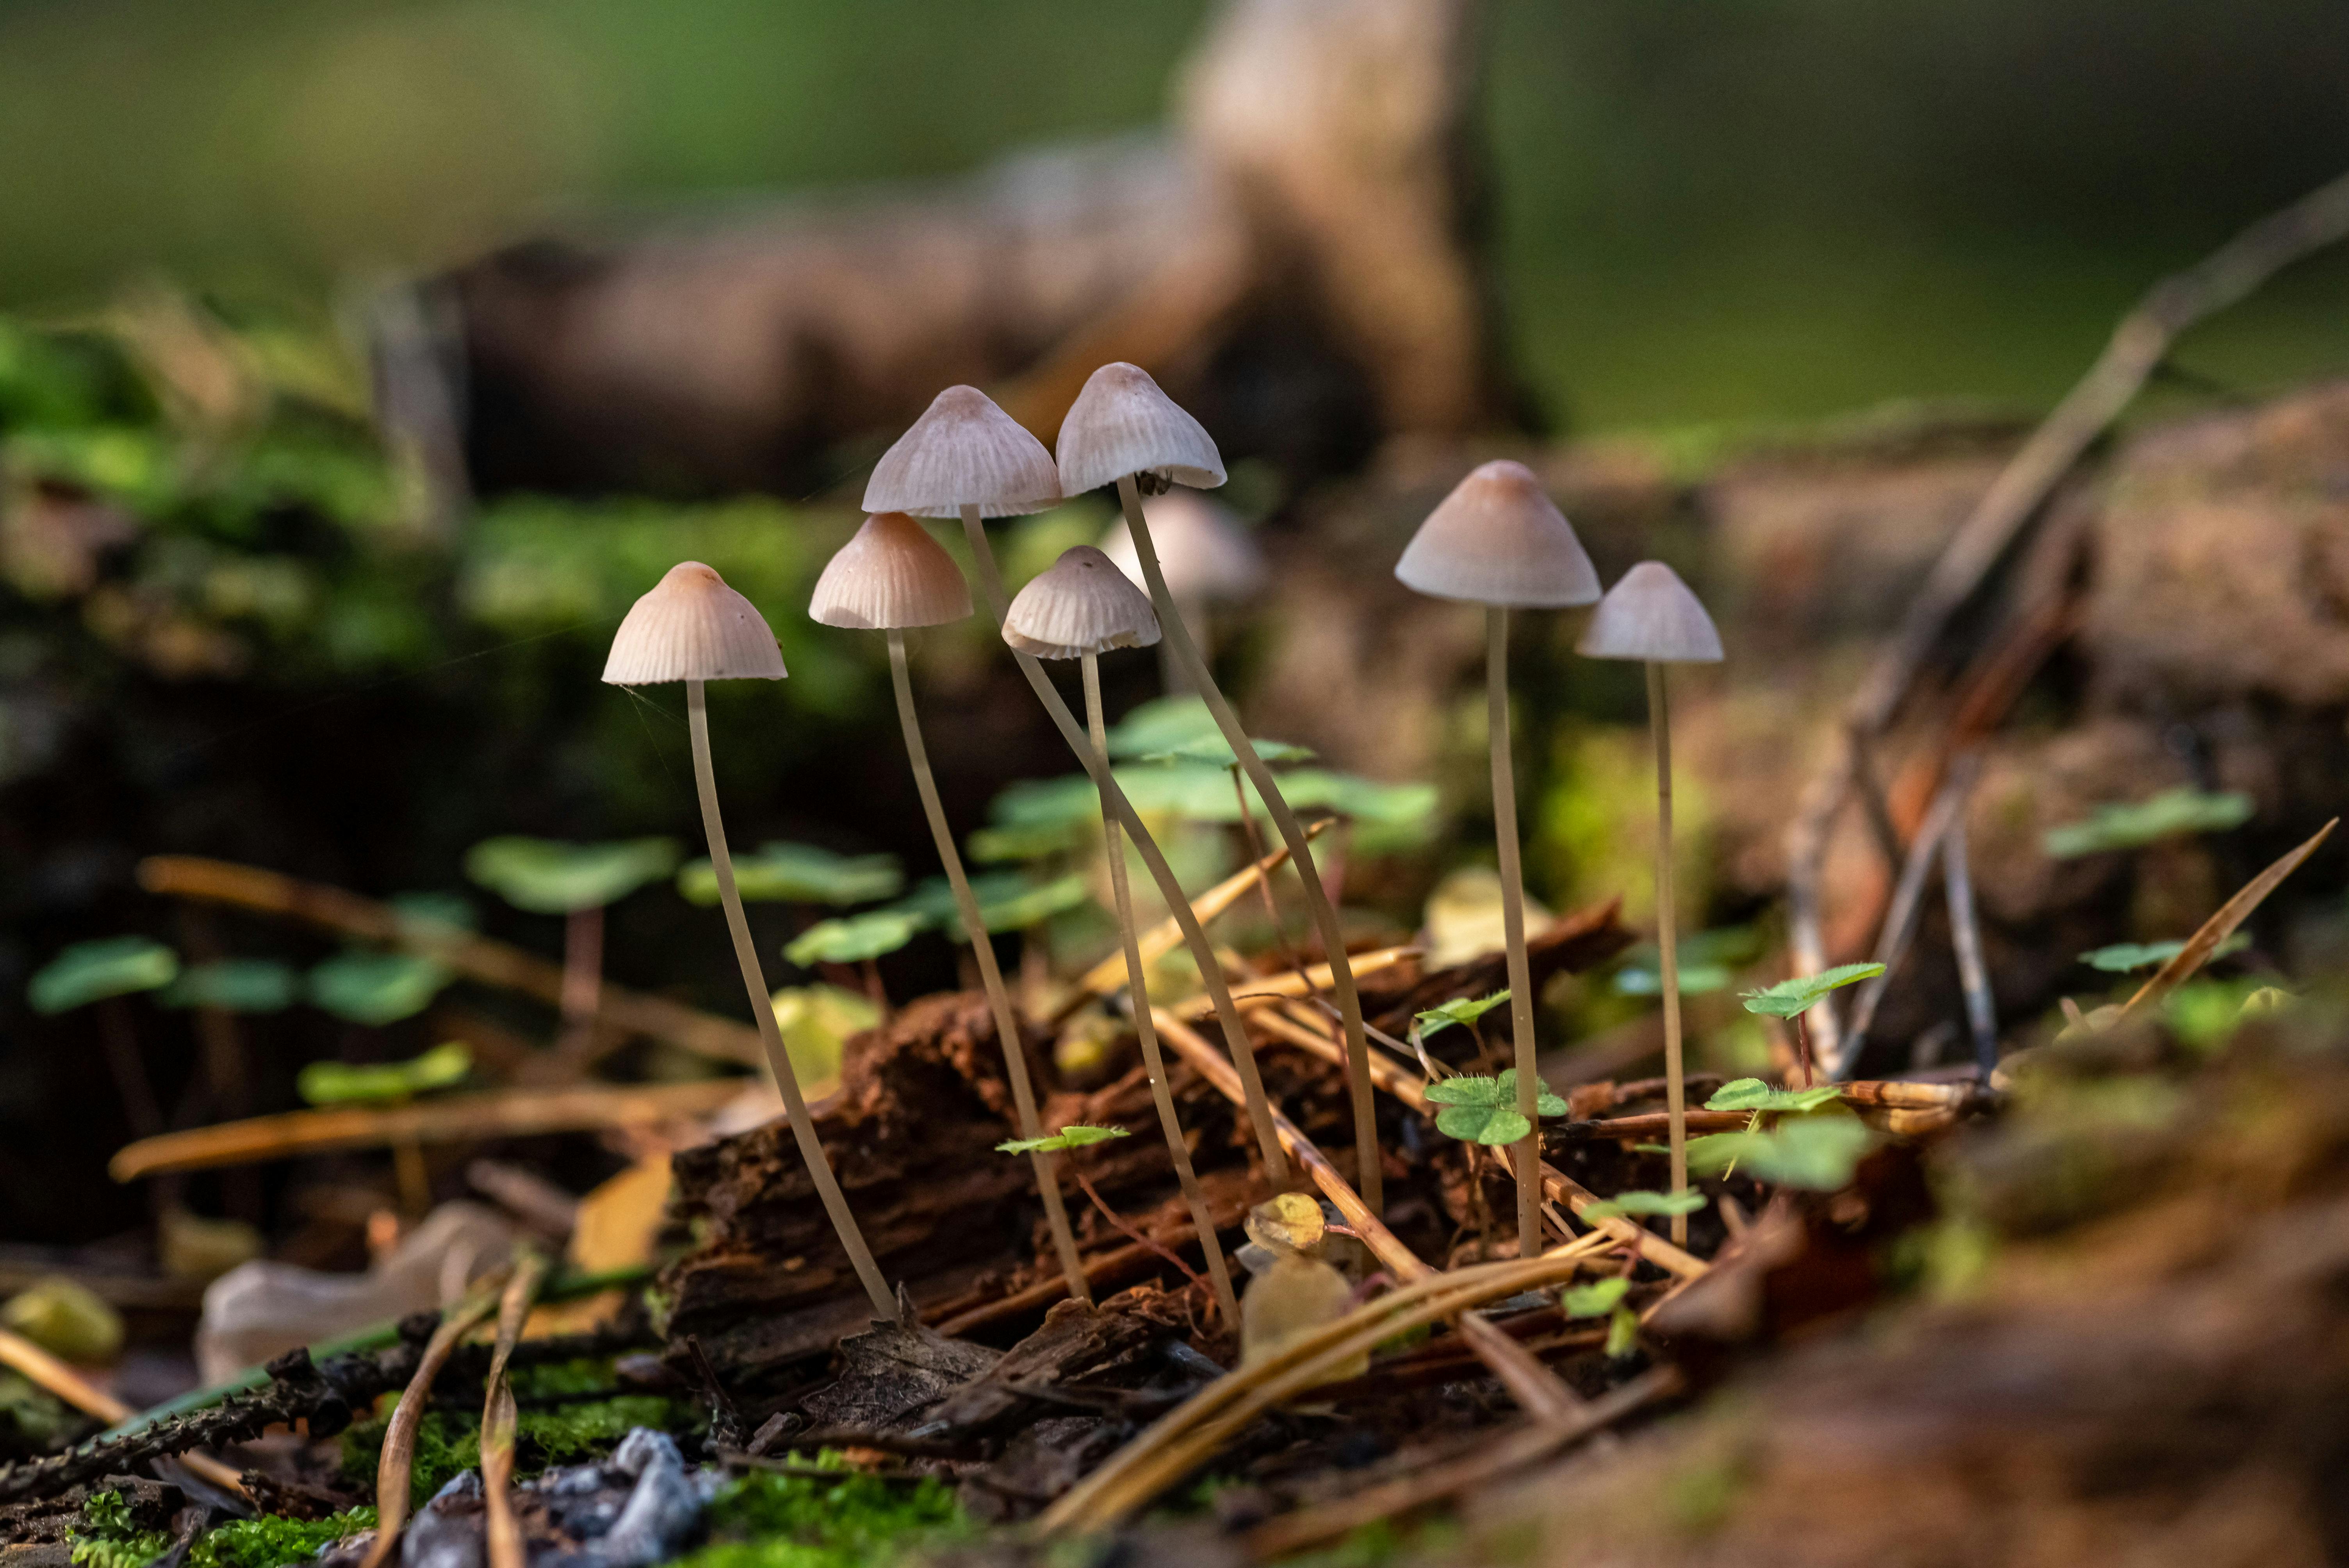 a close up shot of mushrooms